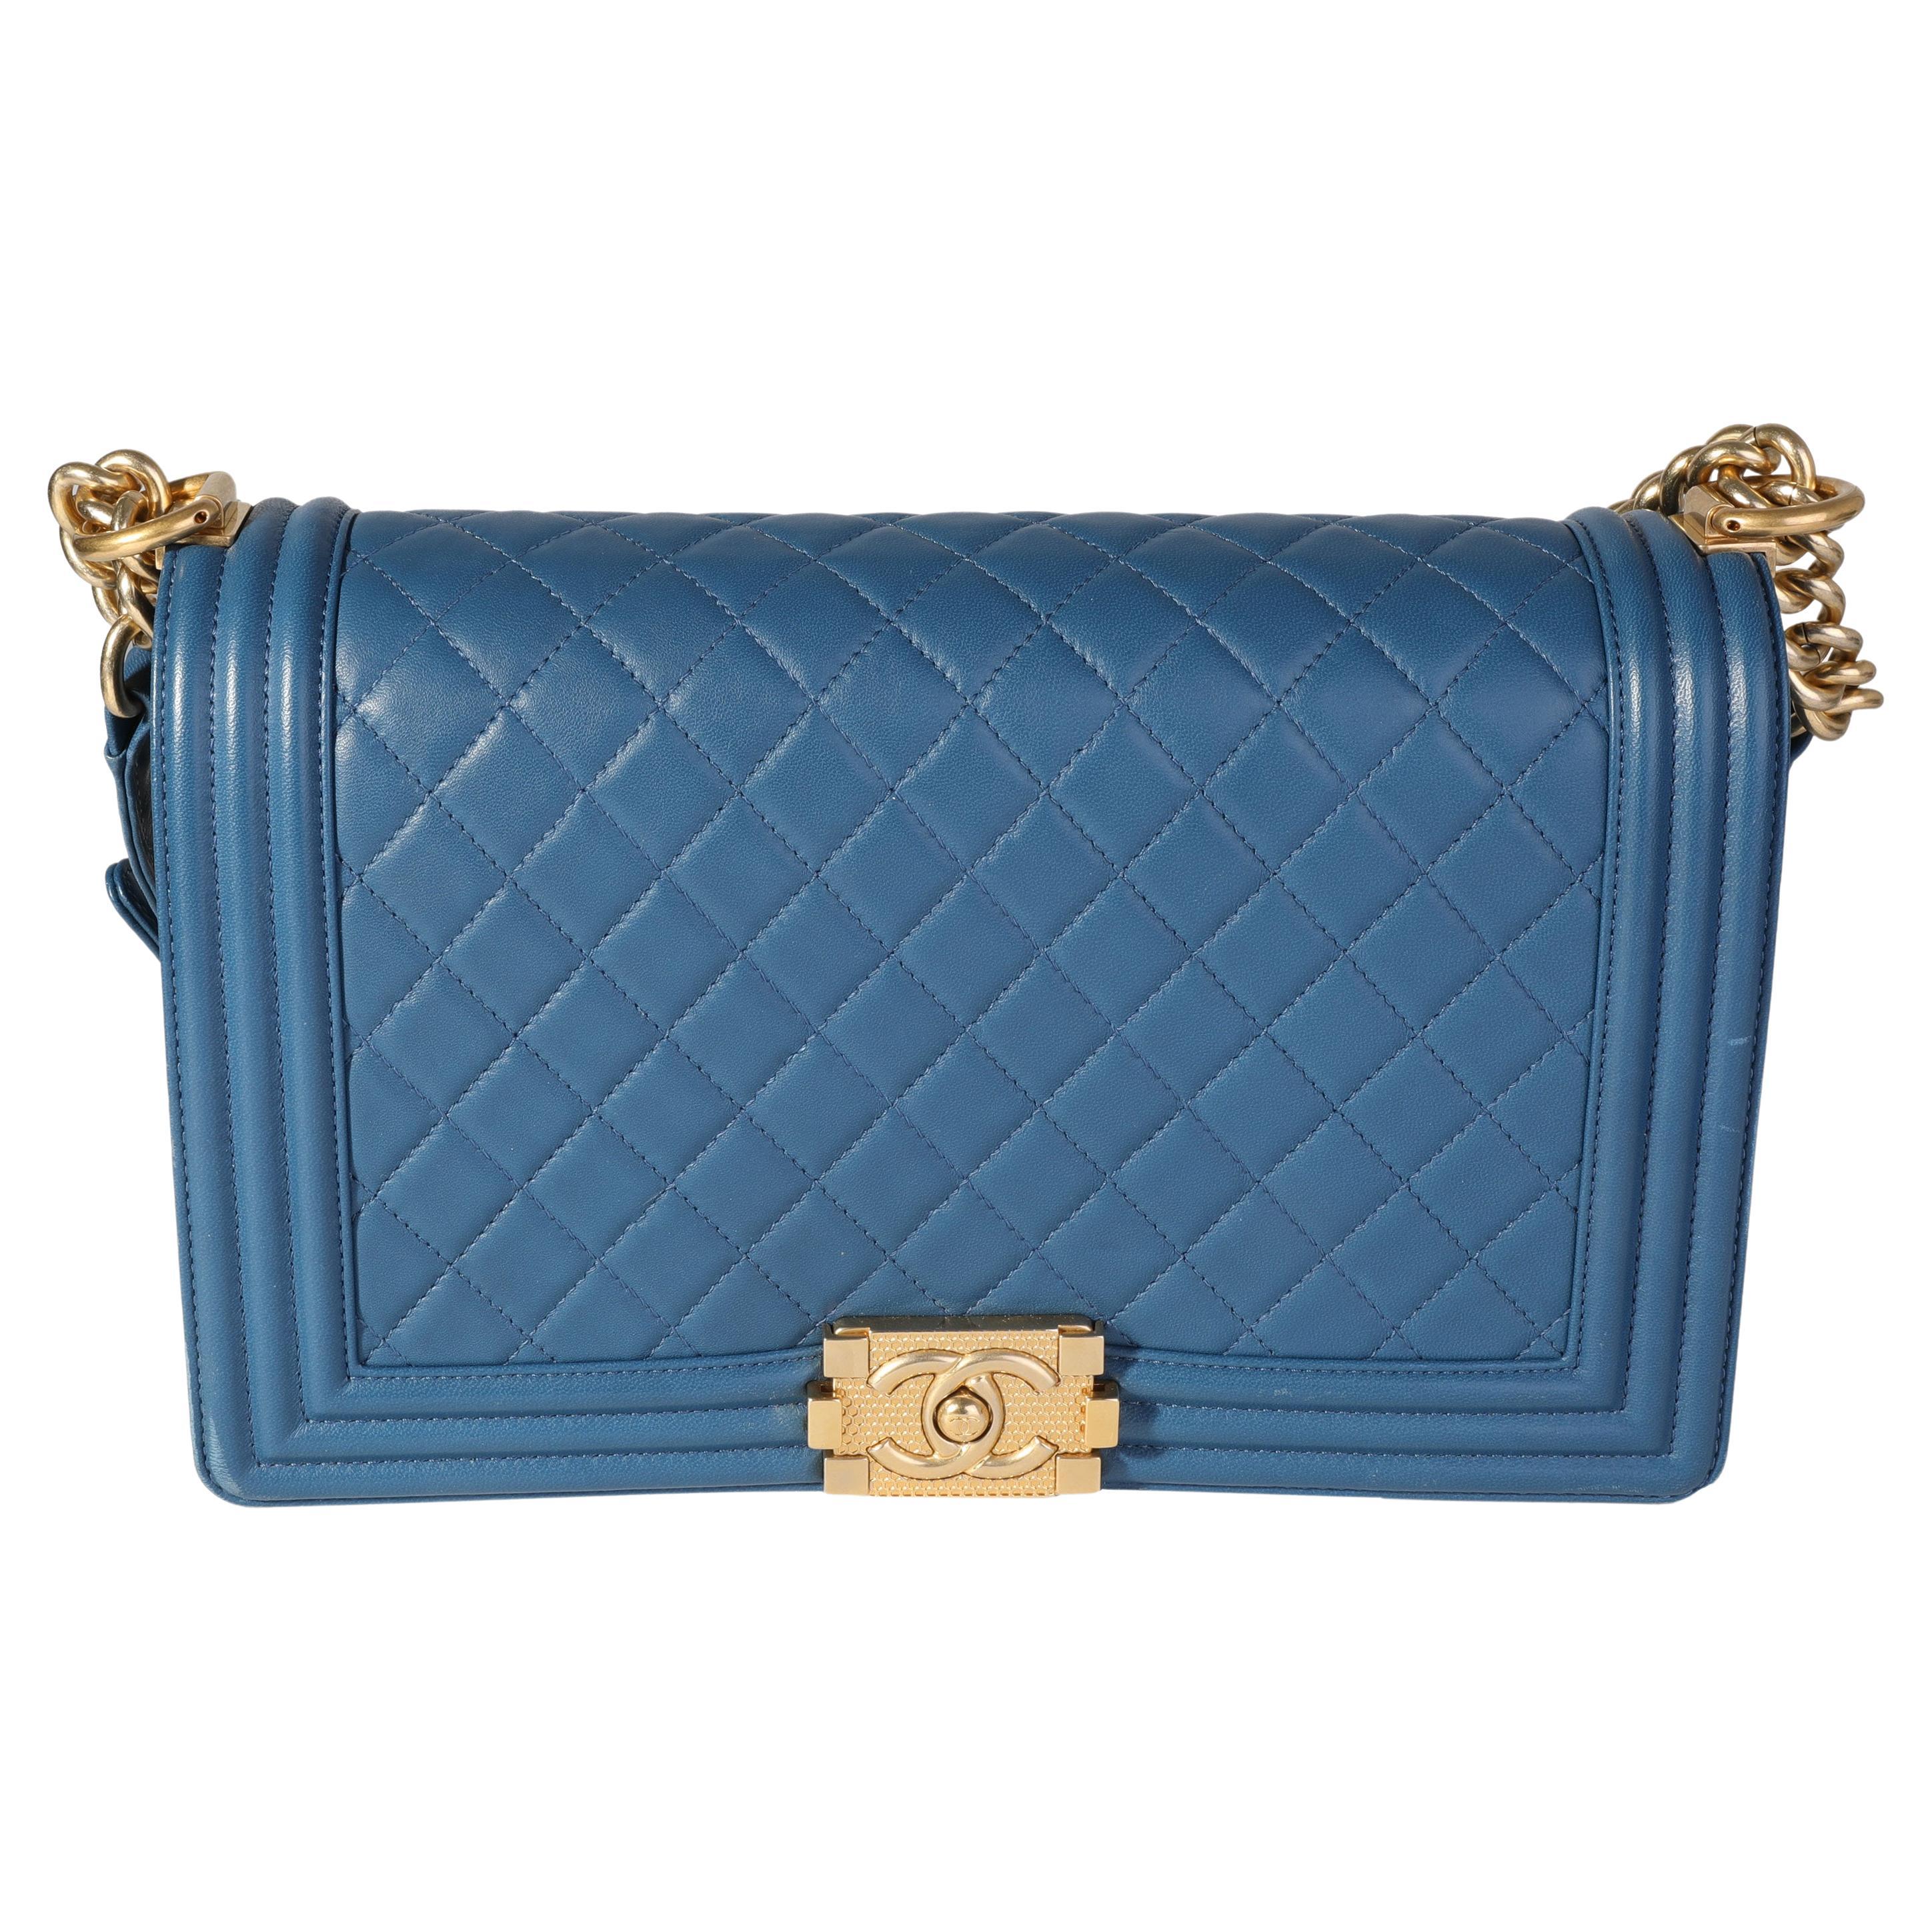 Chanel Blue Quilted Lambskin Medium Boy Bag